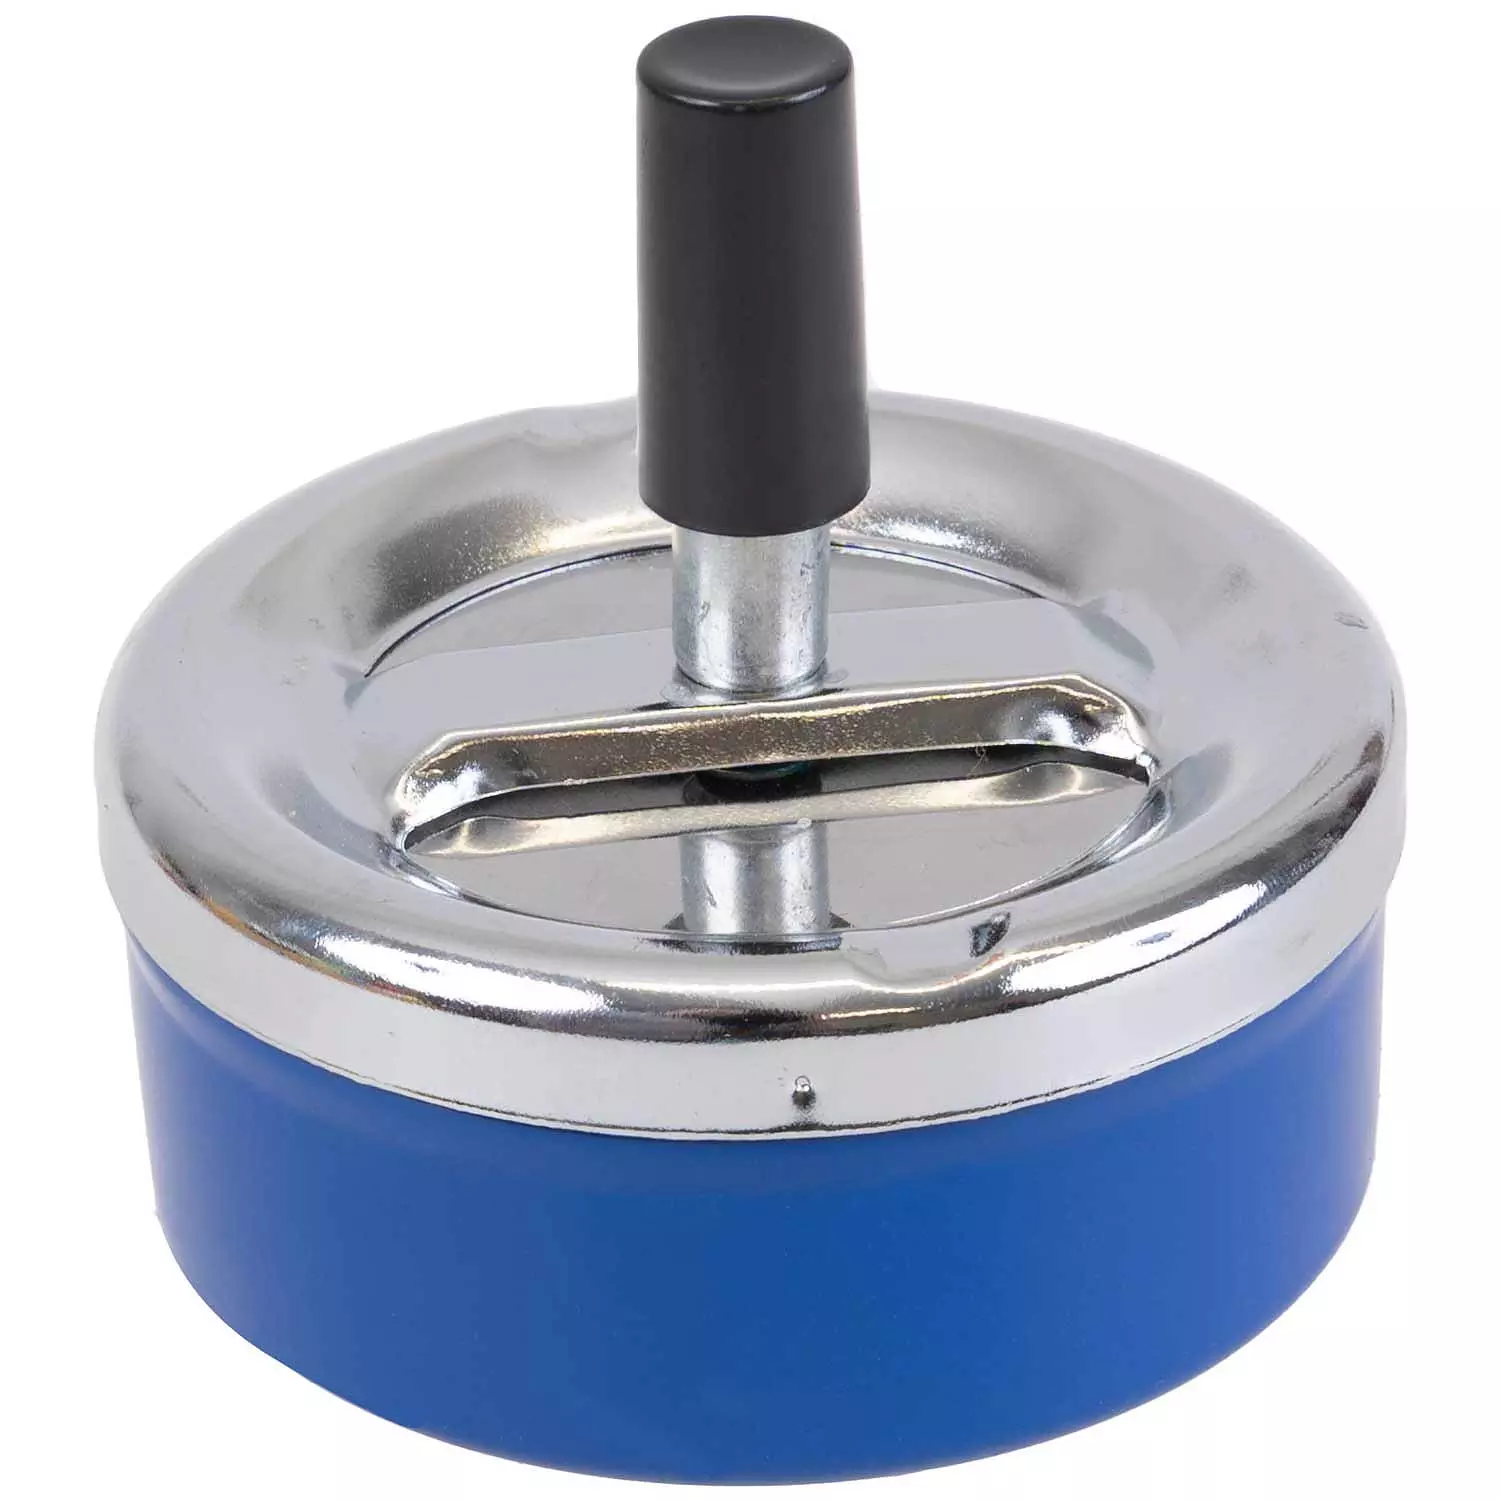 Metal pushrod ashtray, blue